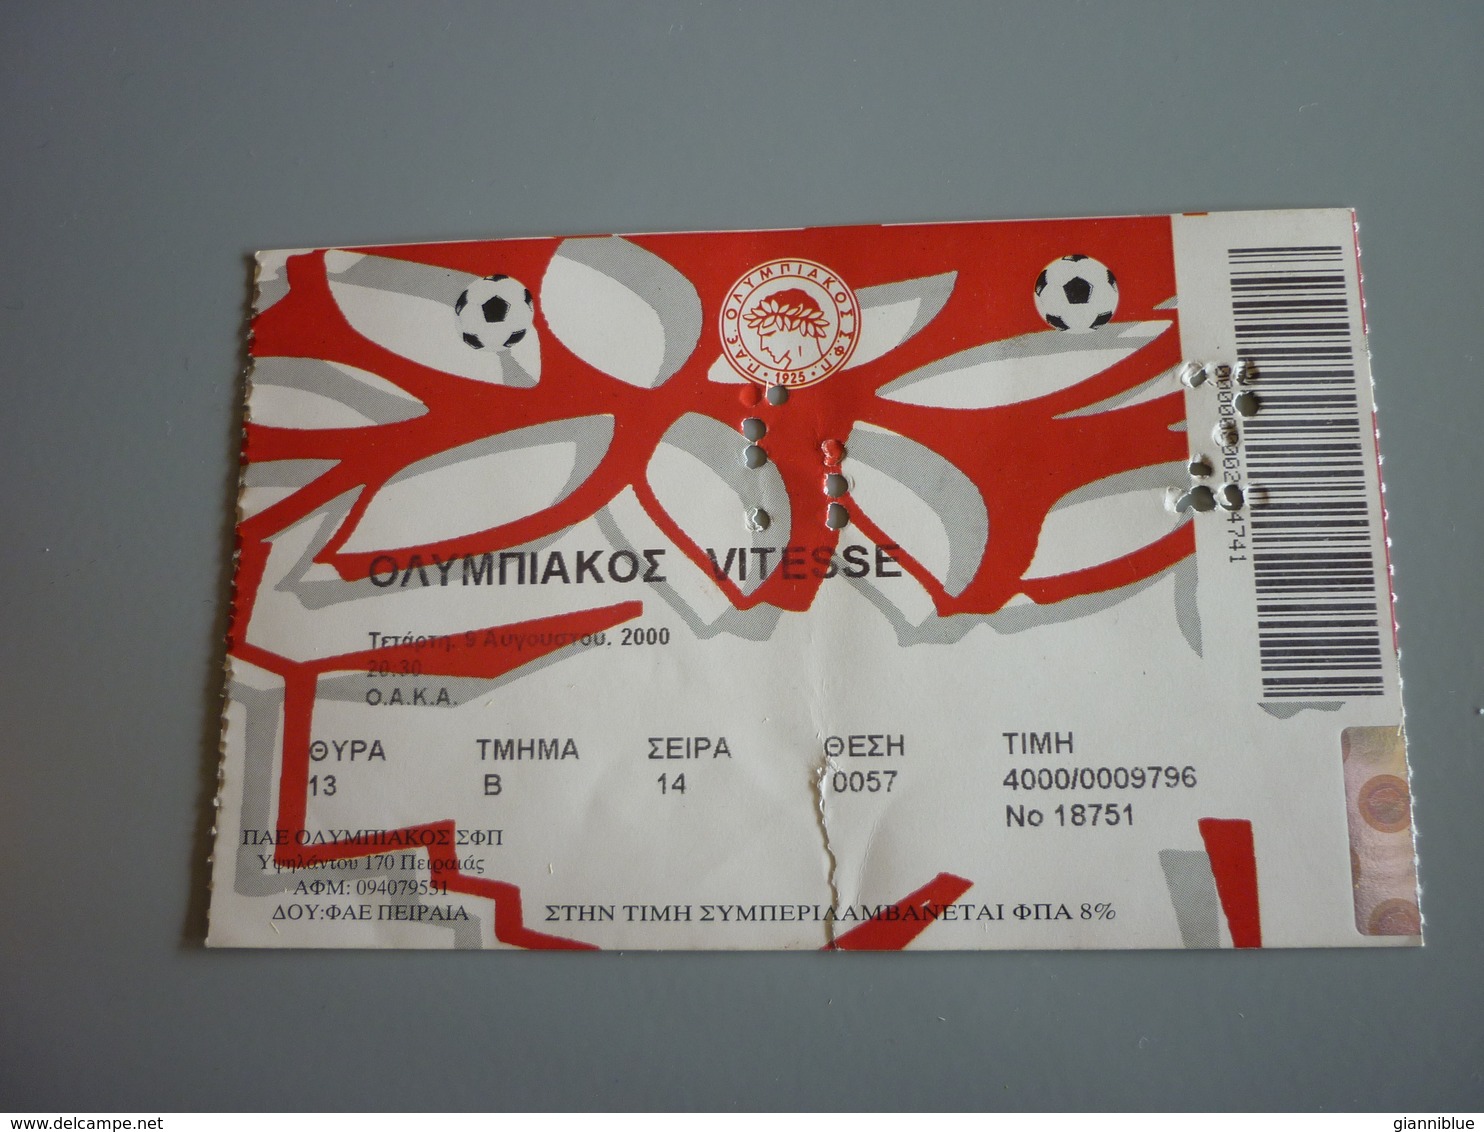 Olympiakos-Vitesse International Friendly Game Football Match Ticket Stub 09/08/2000 Fisherman's Friend Smirnoff Citroen - Tickets - Entradas